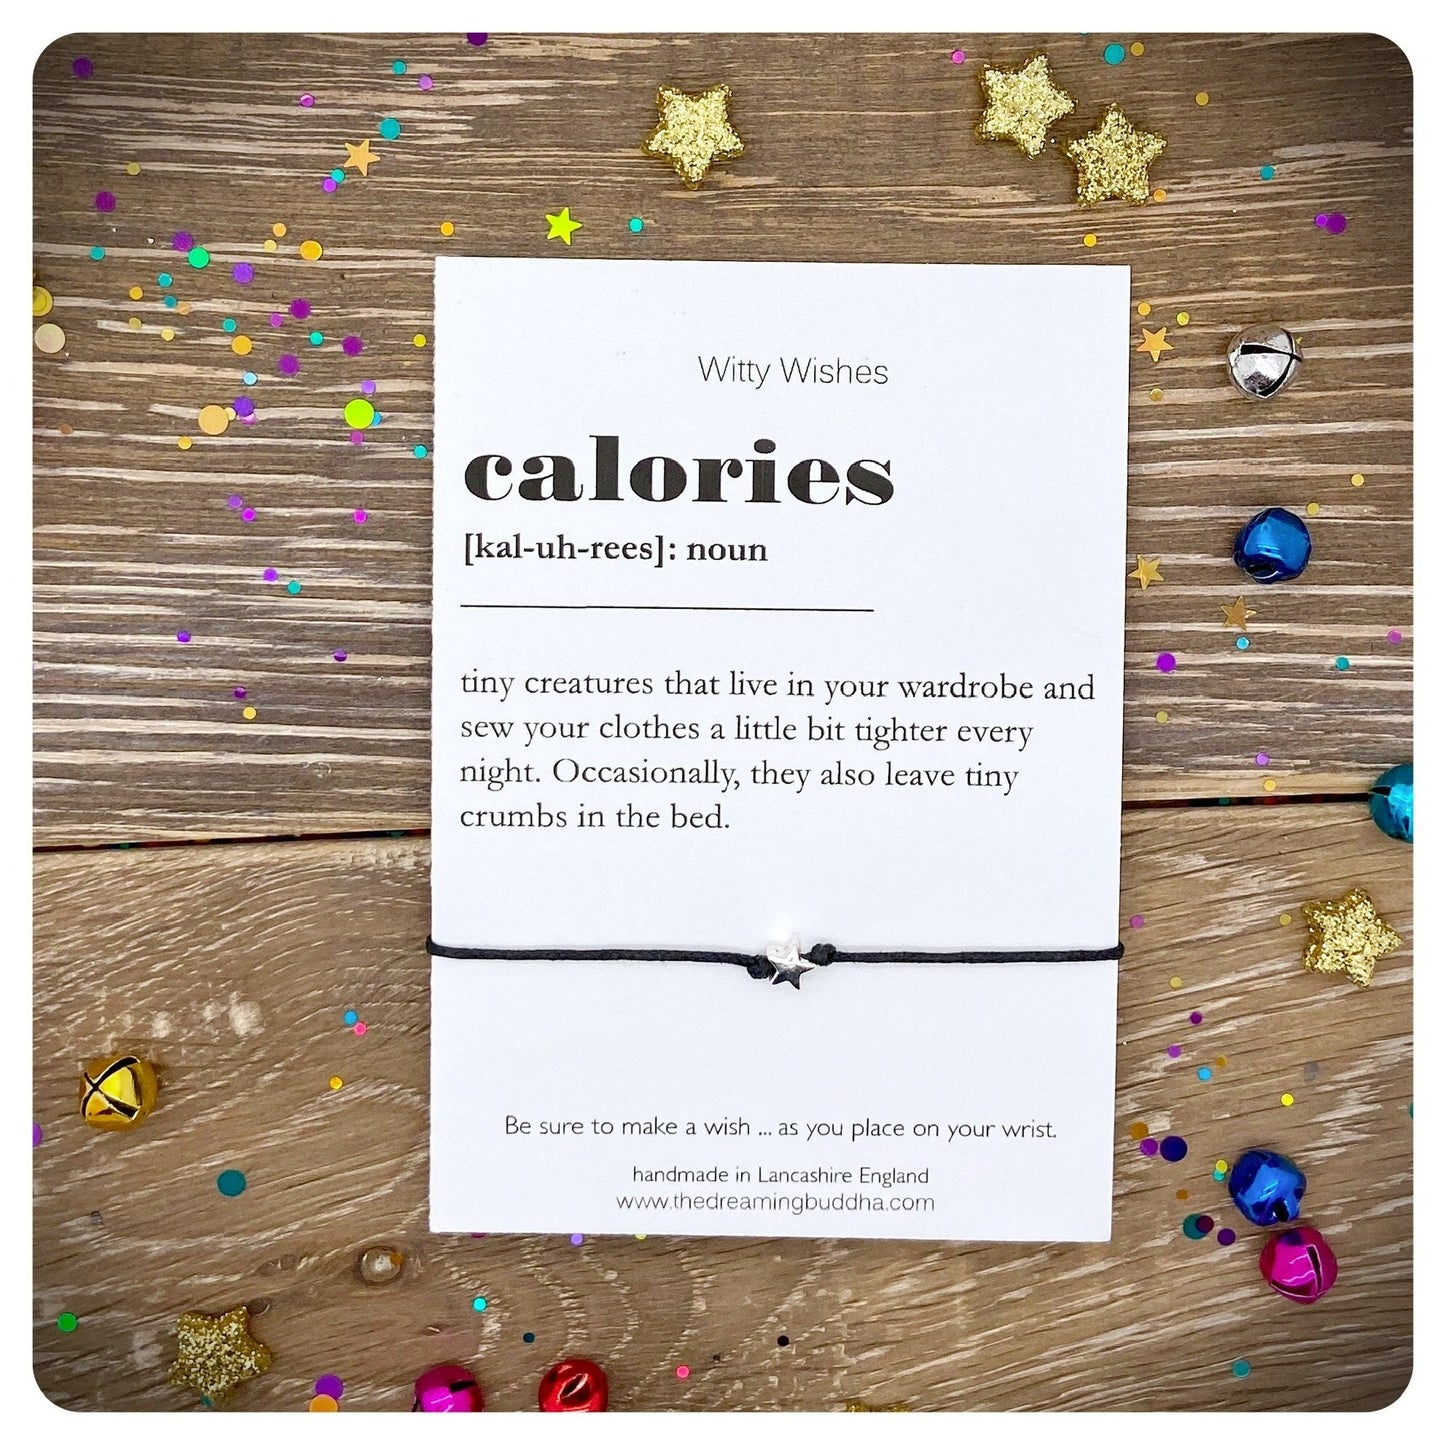 Calories Dictionary Definition, Calories Wish bracelet, Foodie Gift, Funny Diet Card, Friendship Bracelet